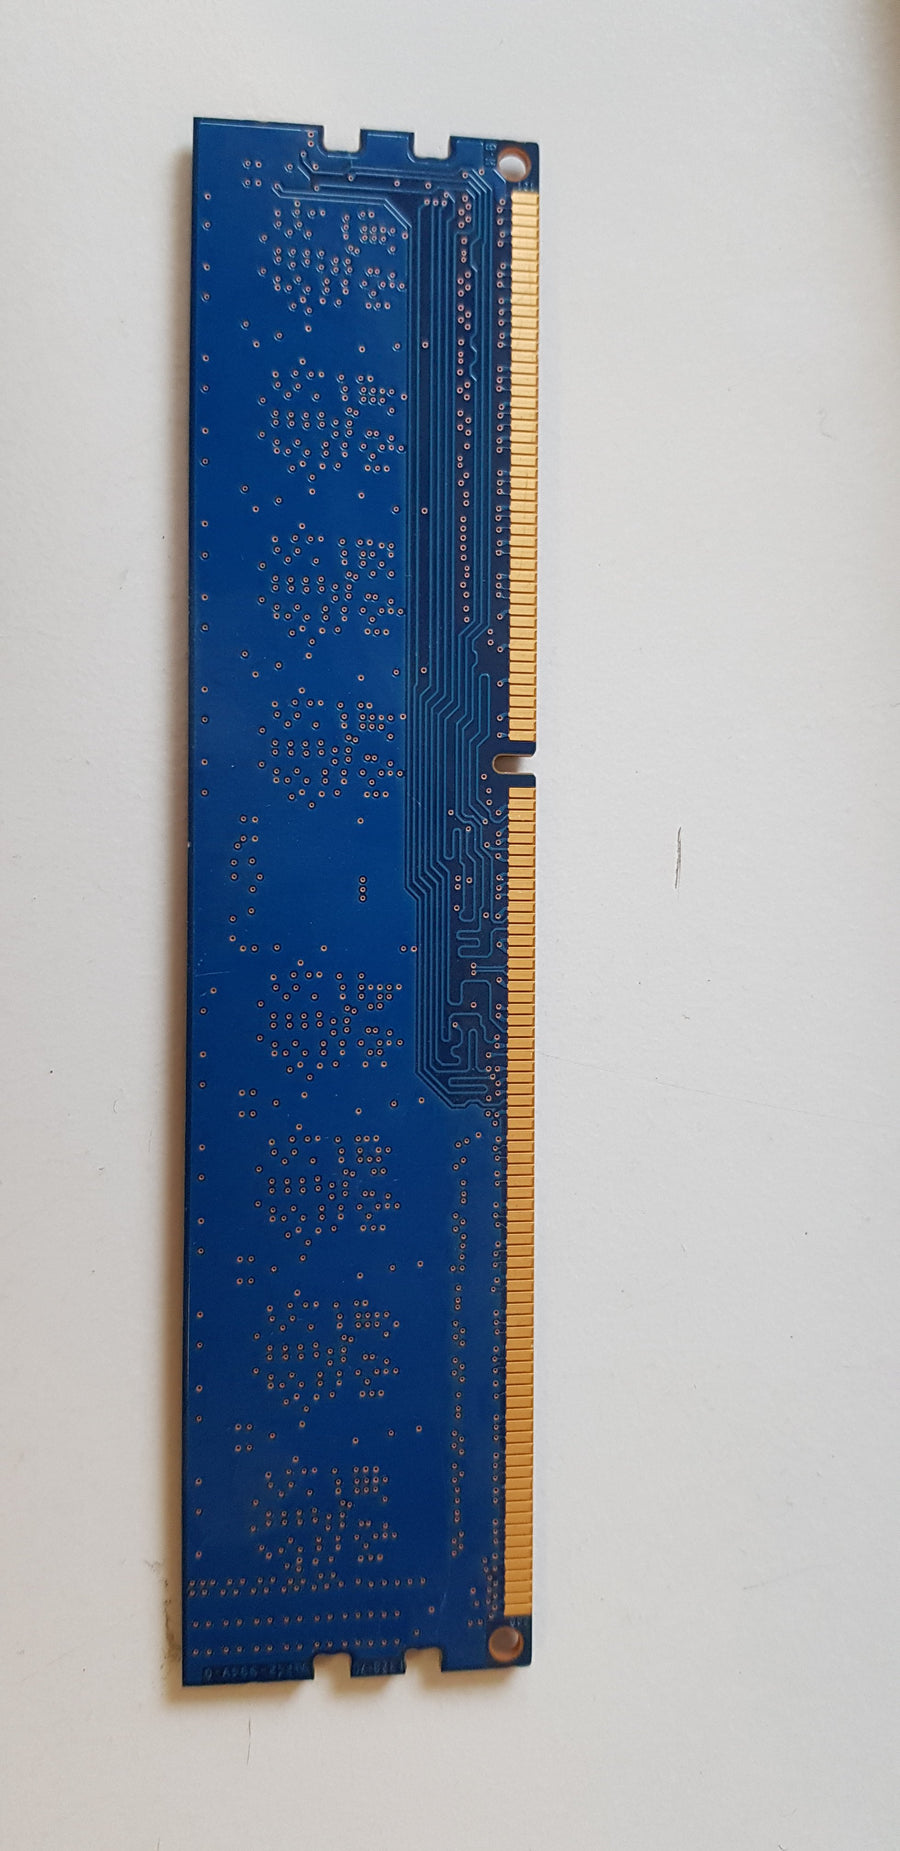 Hynix 2GB 1Rx8 PC3 nonECC 240Pin DDR3 RAM DIMM Memory Module HMT325U6EFR8C-PB N0 AA